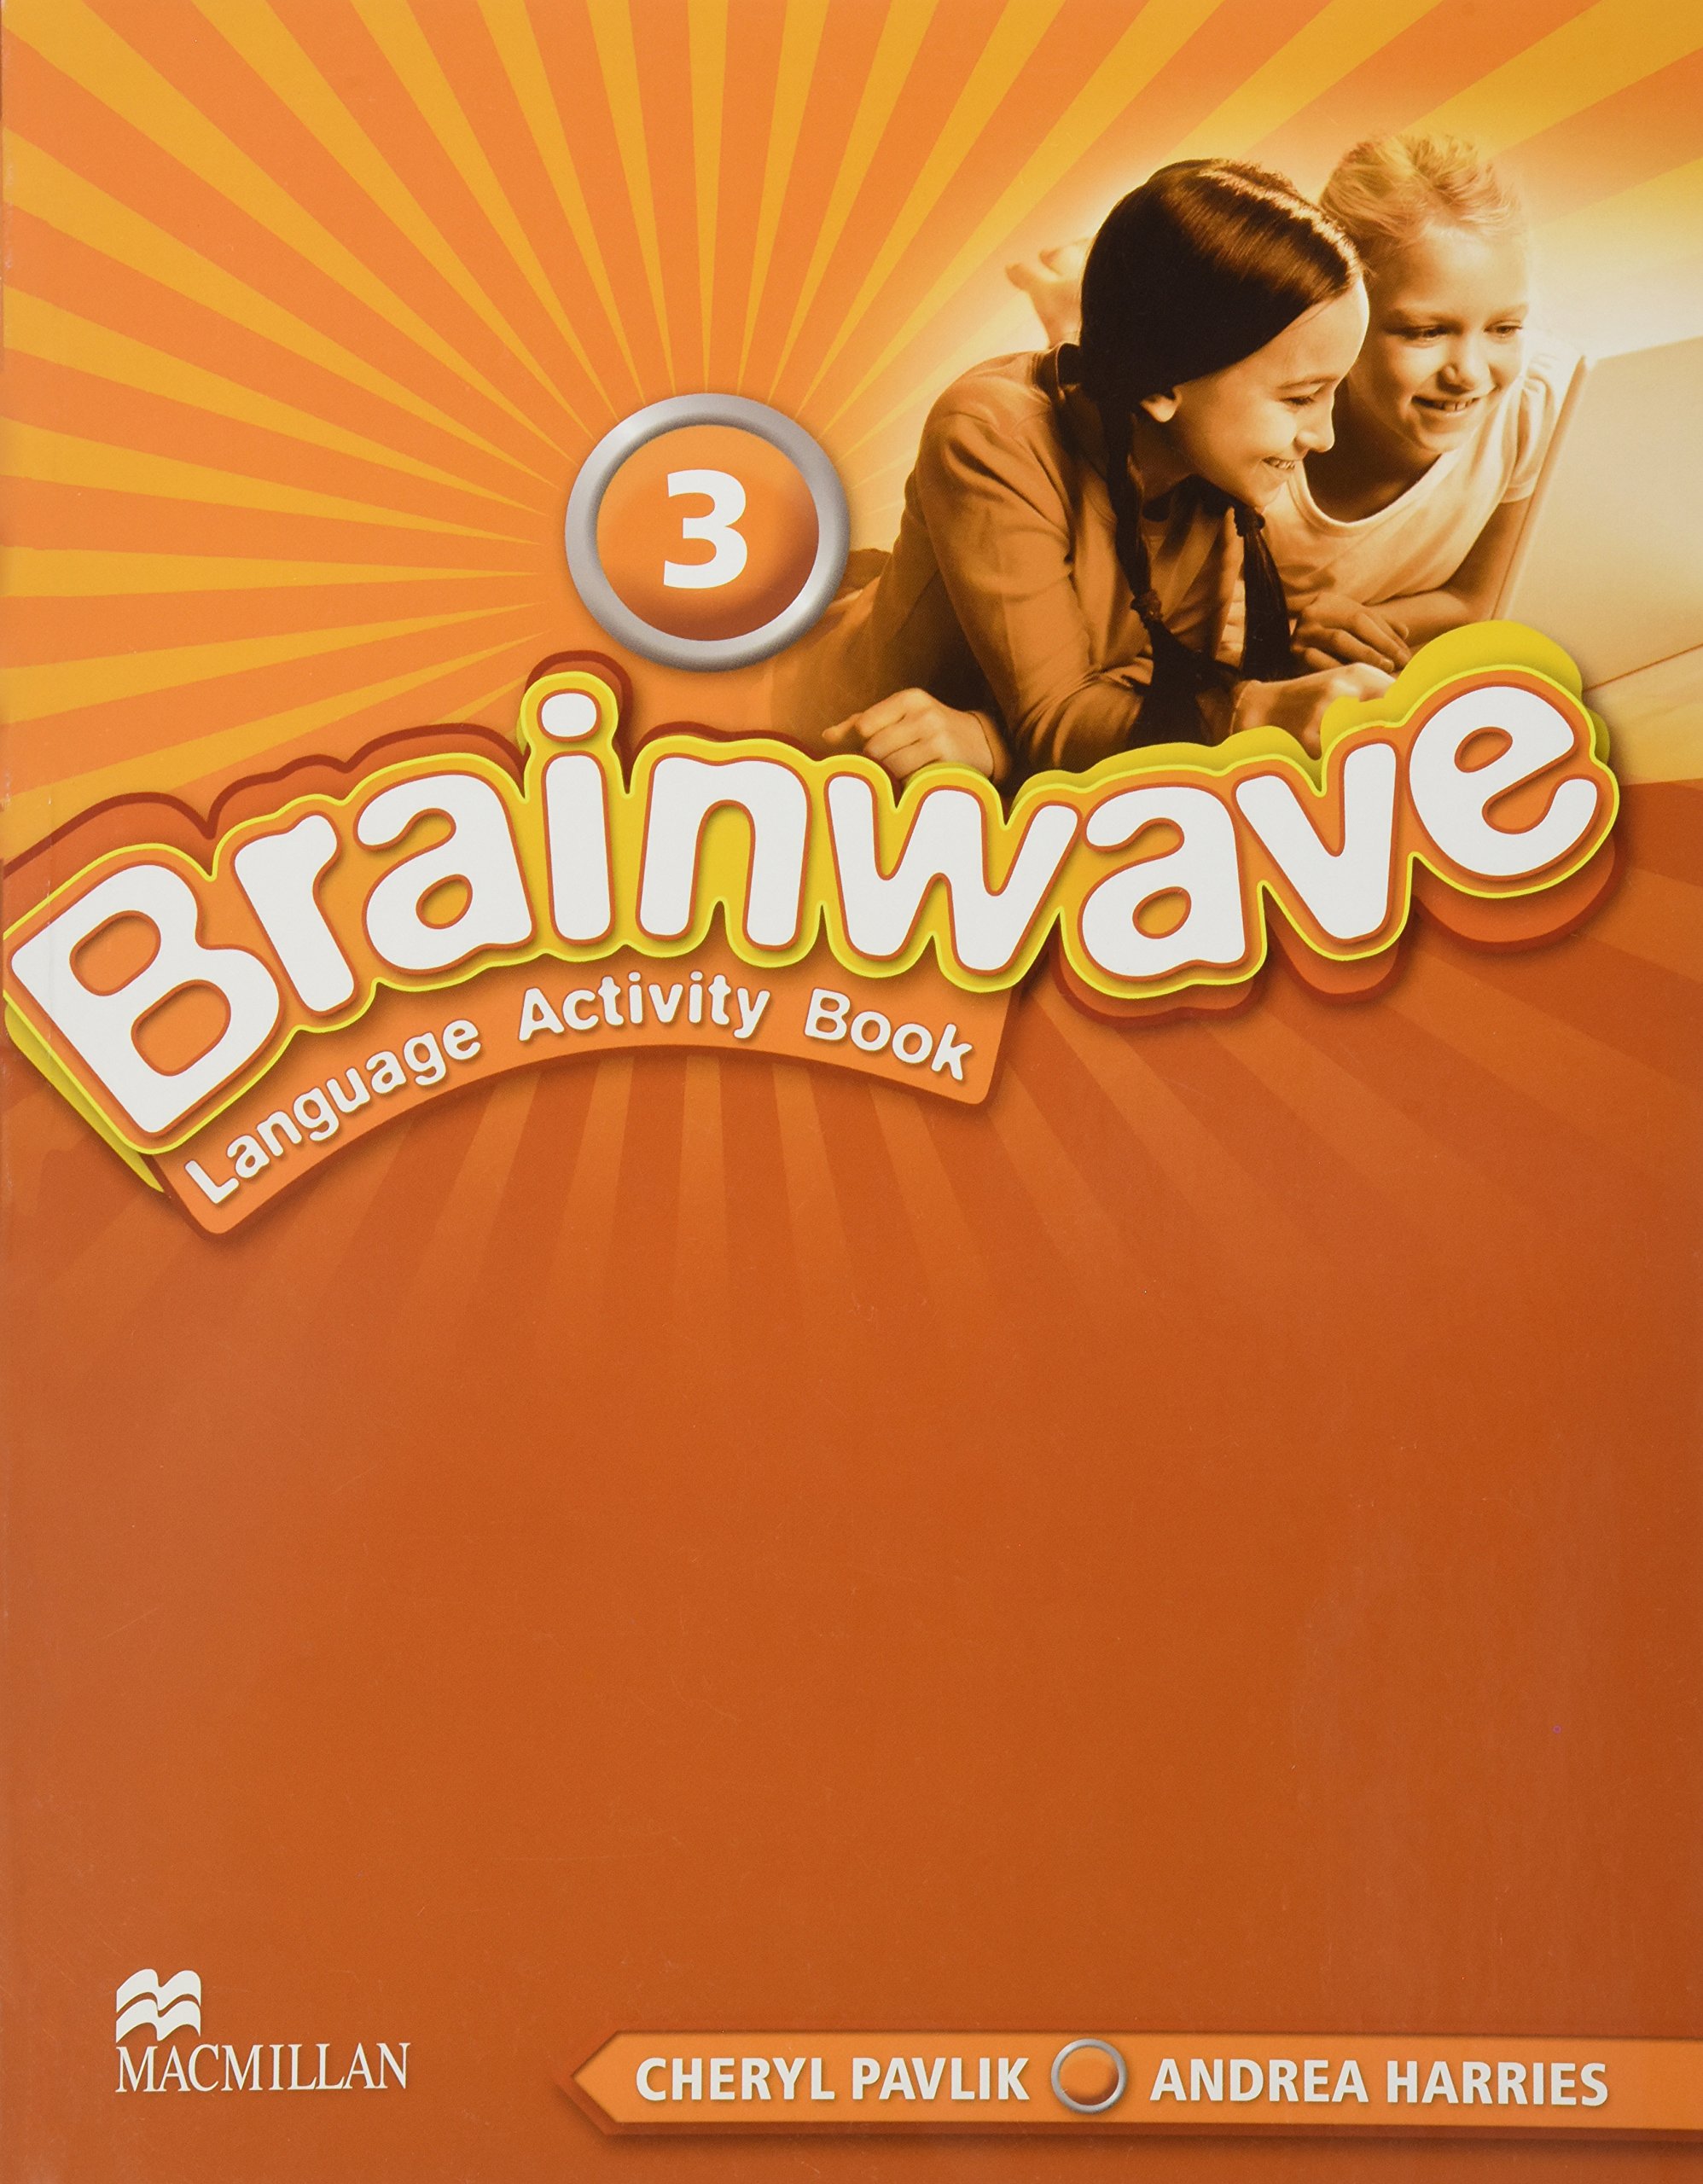 Brainwave 3 - Language Activity Book | Cheryl Pavlik, Andrea Harries